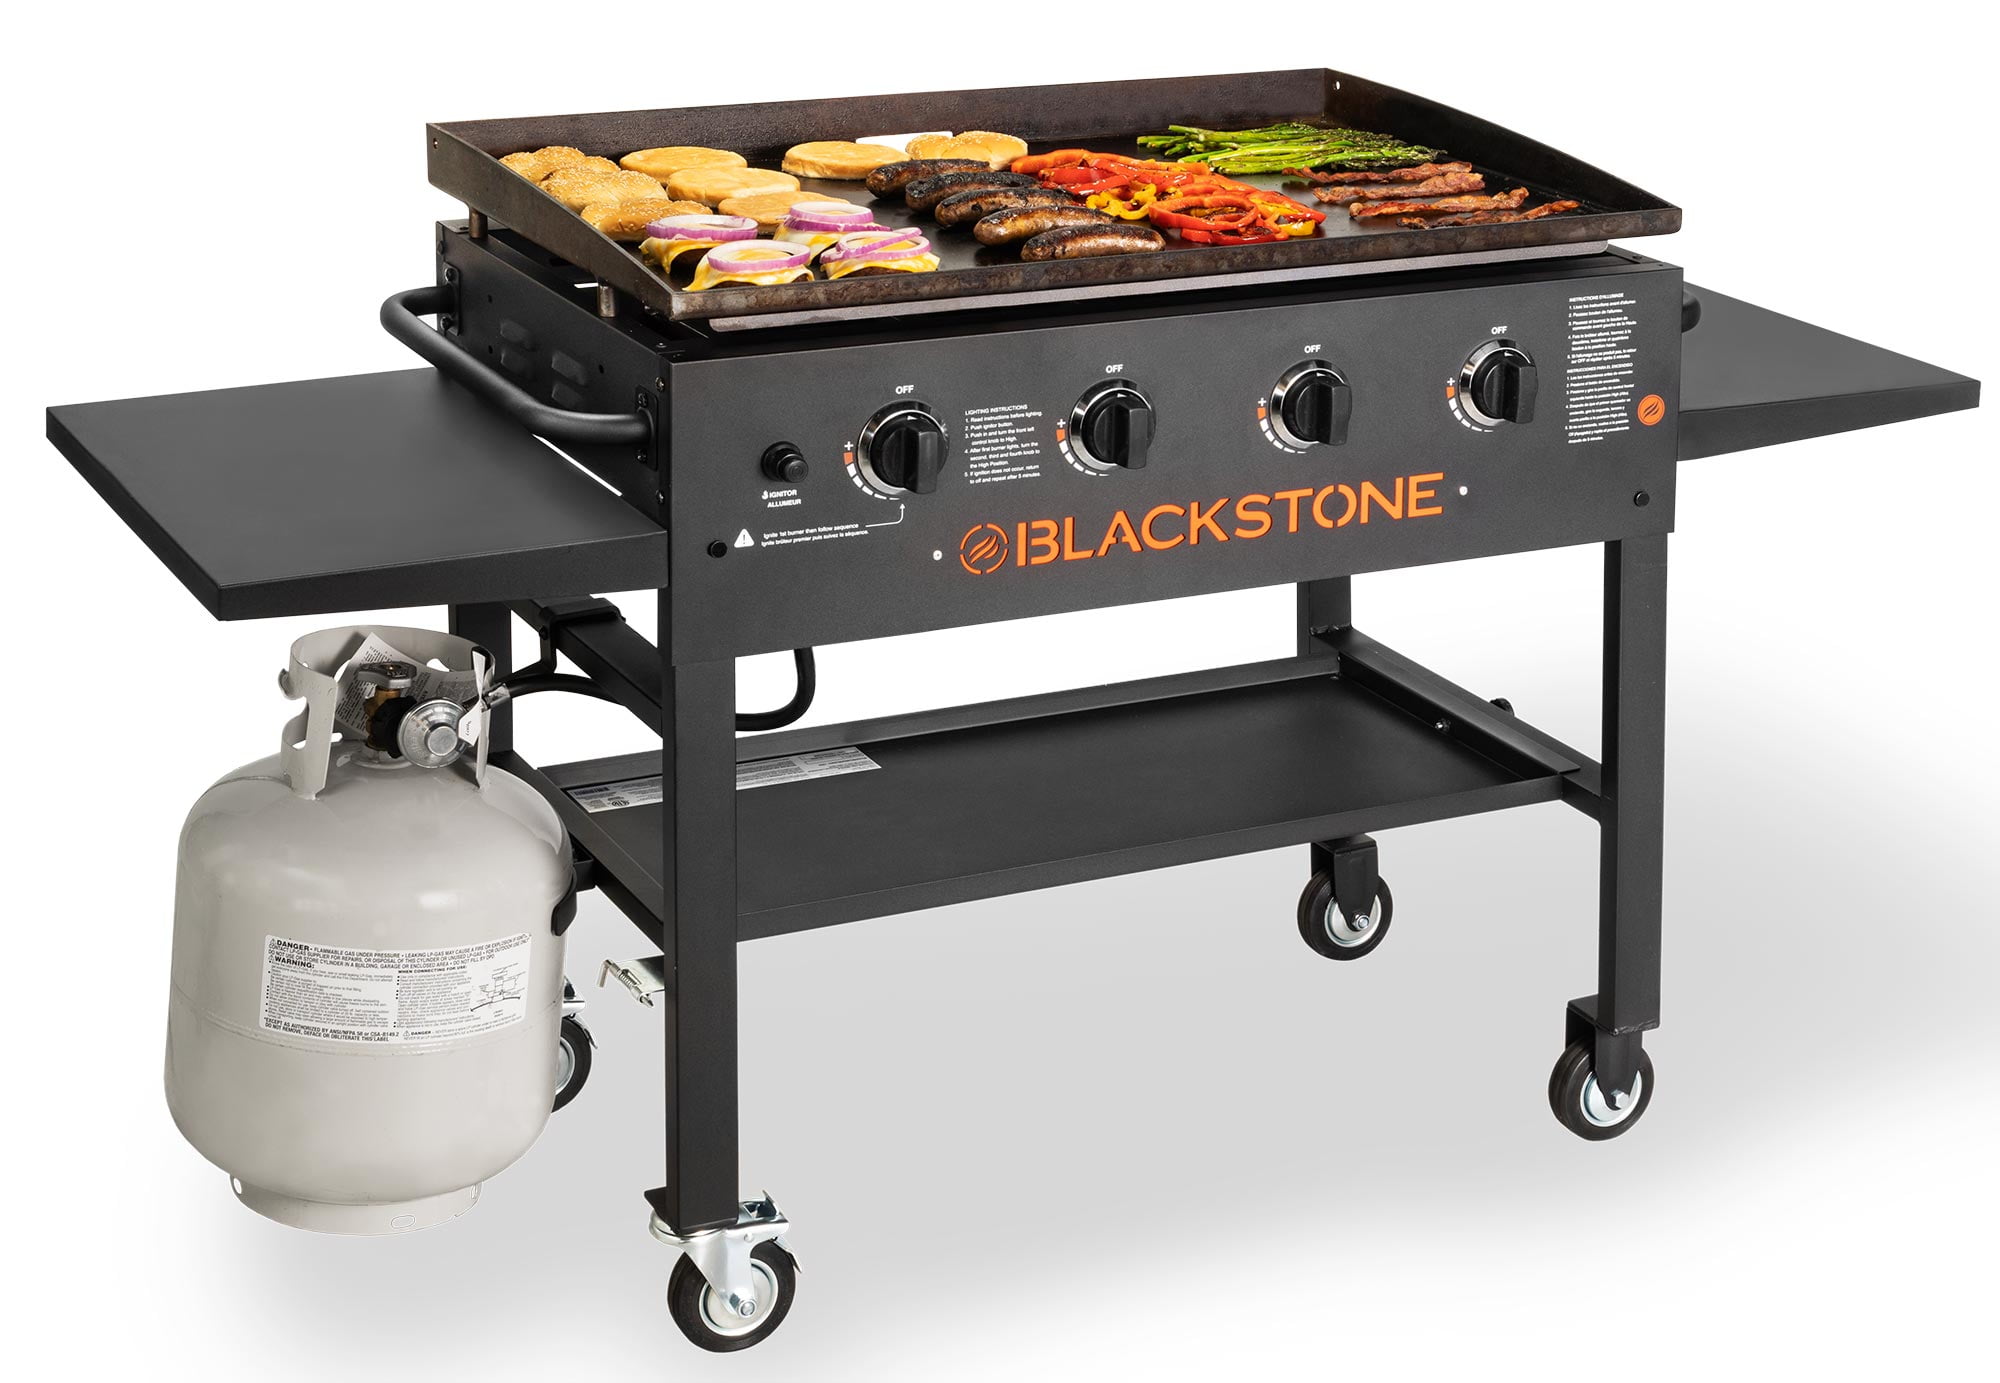 Blackstone 4 Burner 36 Griddle Cooking, Blackstone Liquid Propane Freestanding Outdoor Griddle Black 4 Burners With Lid